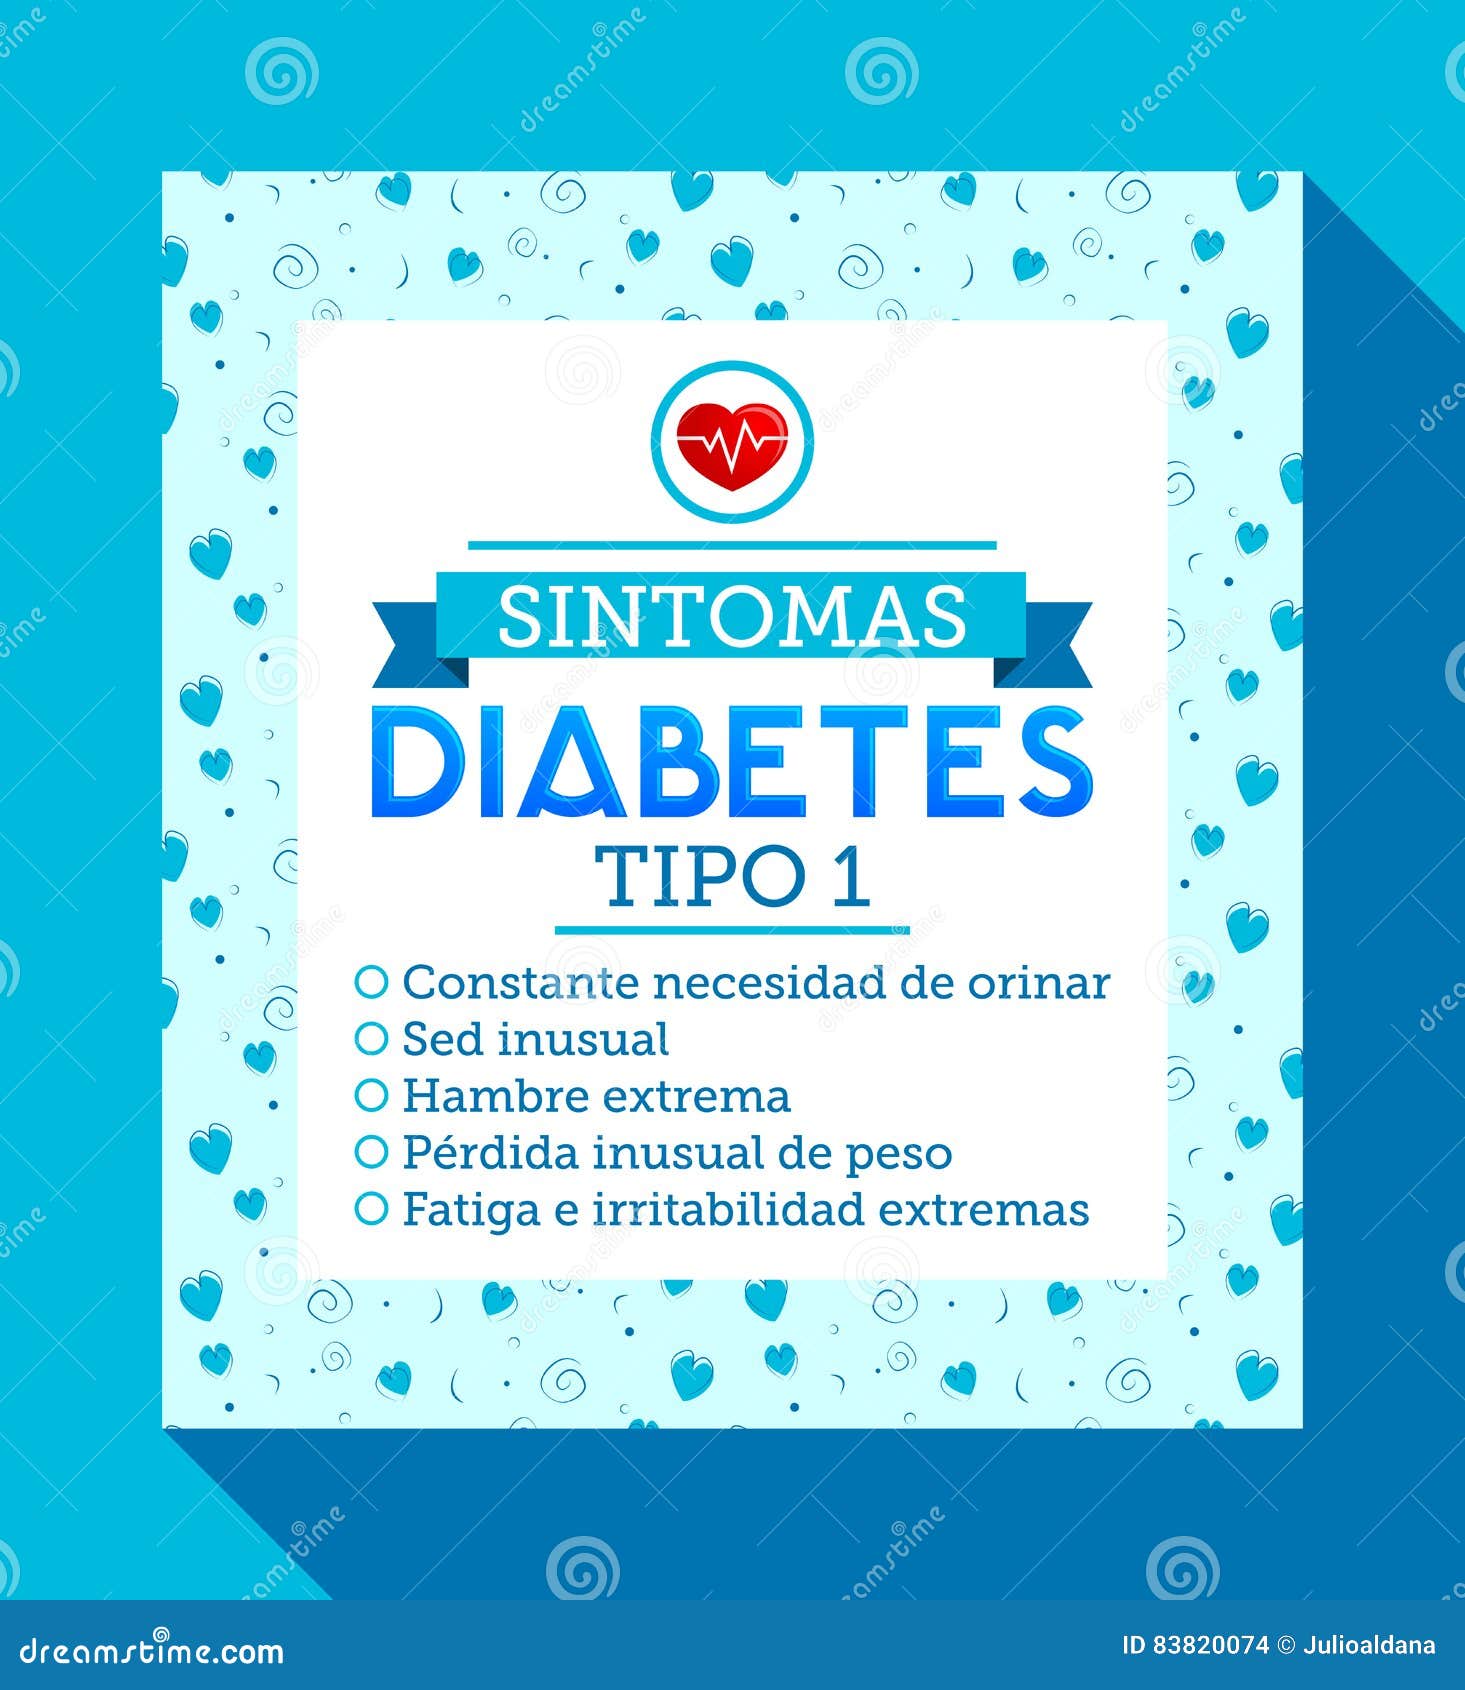 sintomas diabetes tipo 1, spanish translation: symptoms of type 1 diabetes